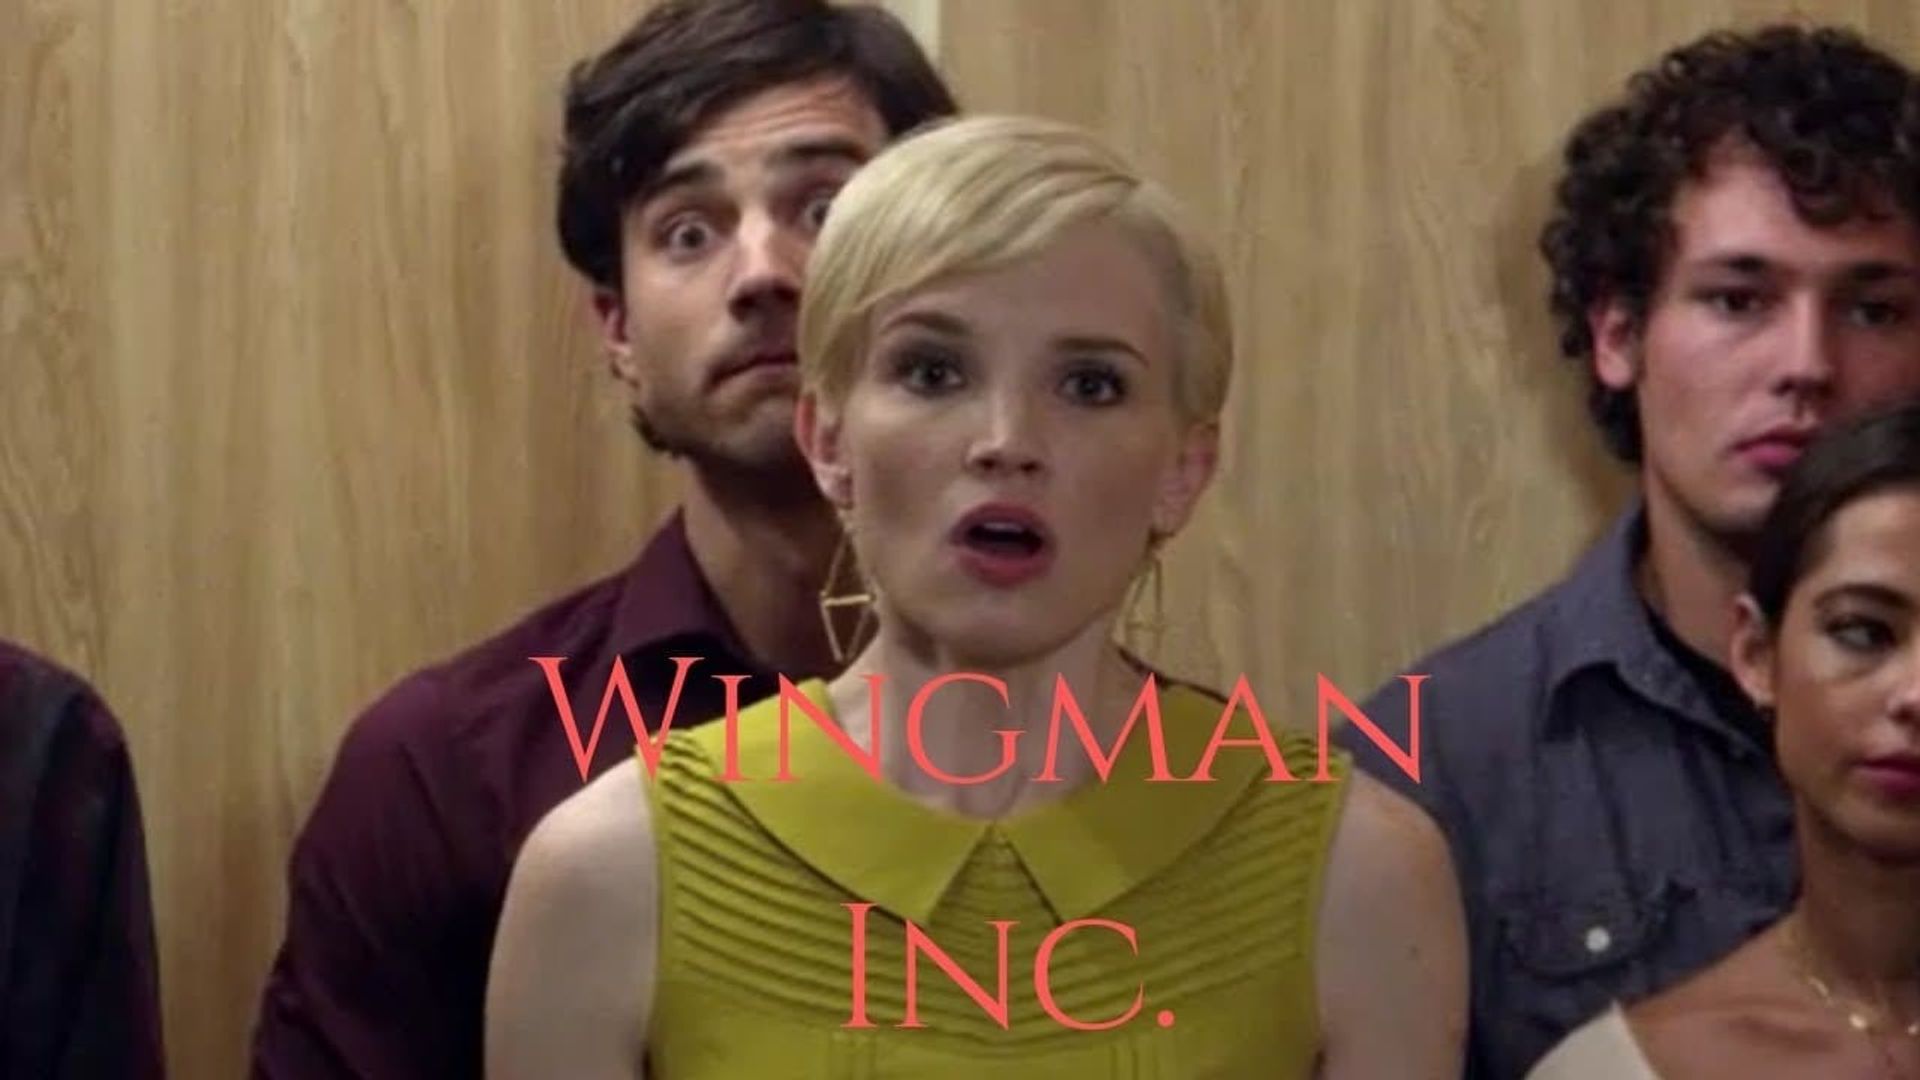 Wingman Inc. background